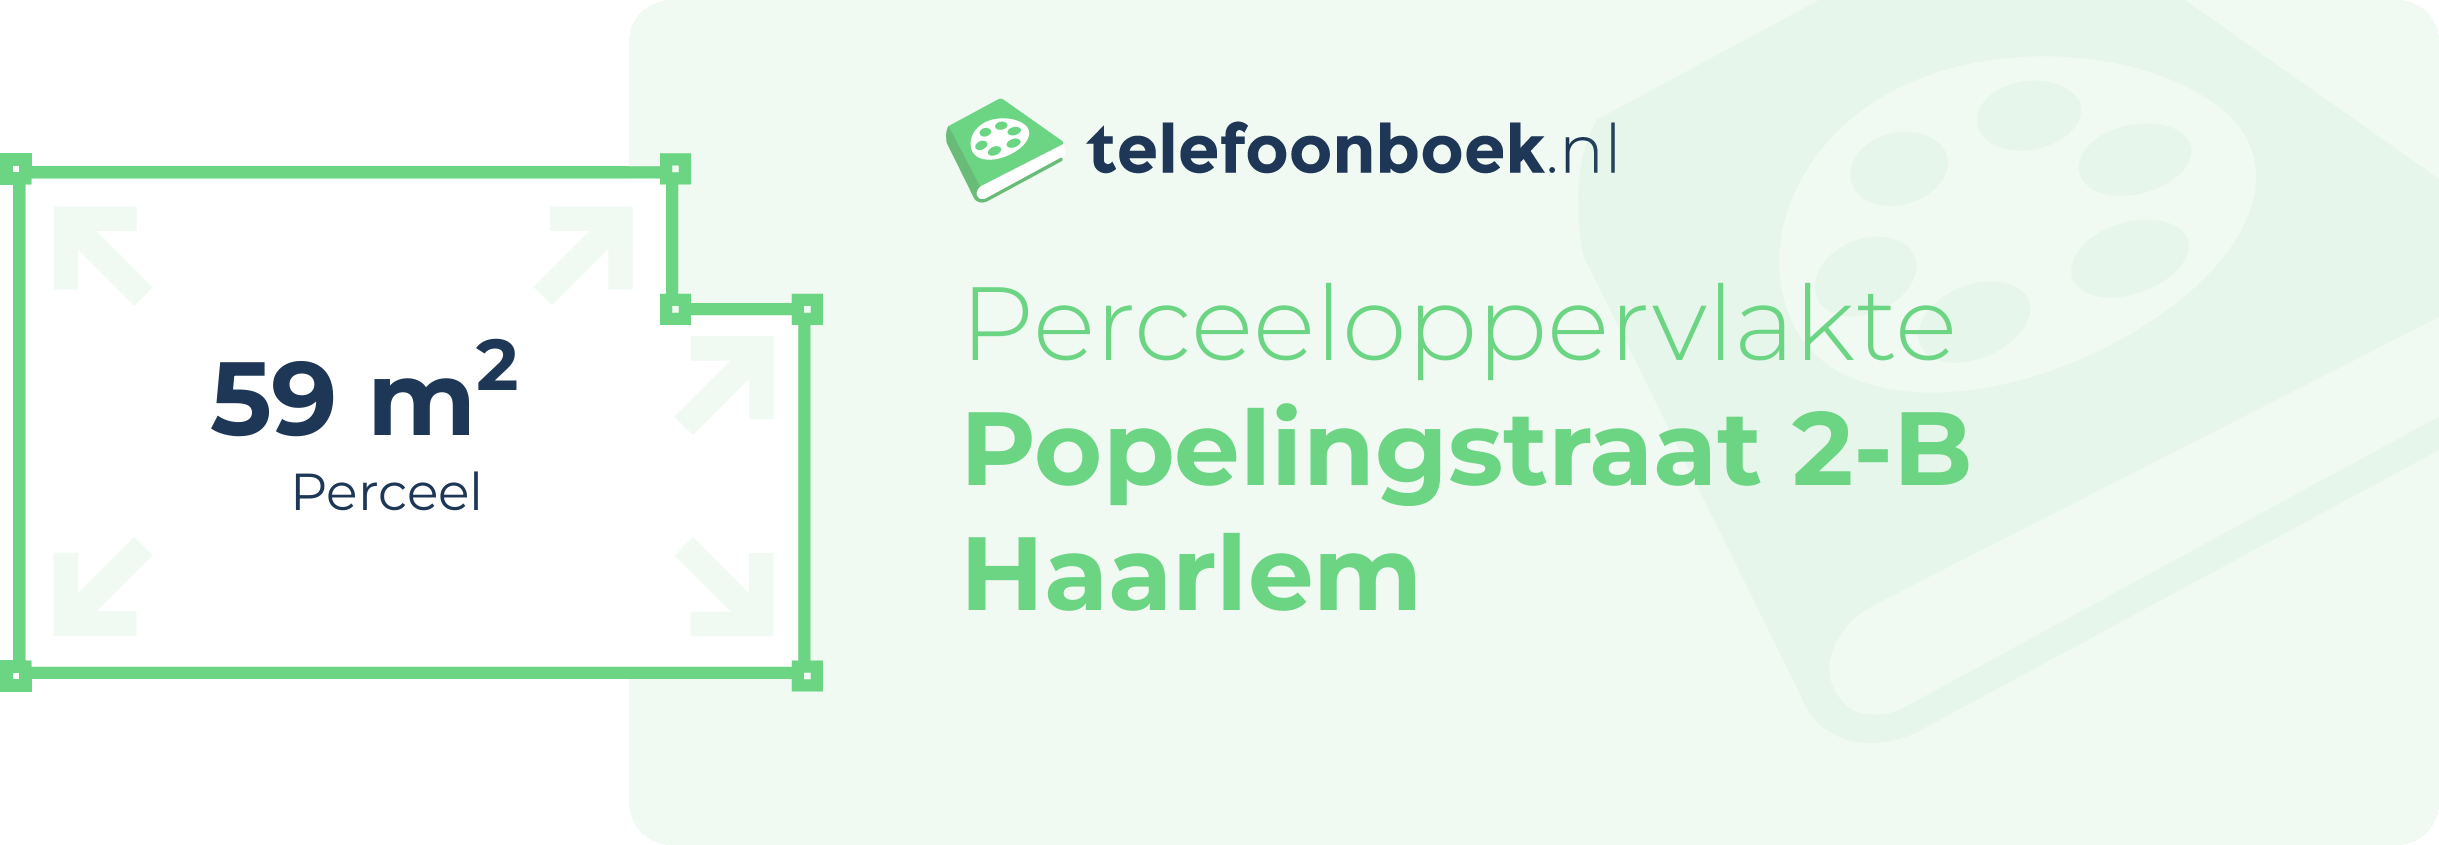 Perceeloppervlakte Popelingstraat 2-B Haarlem